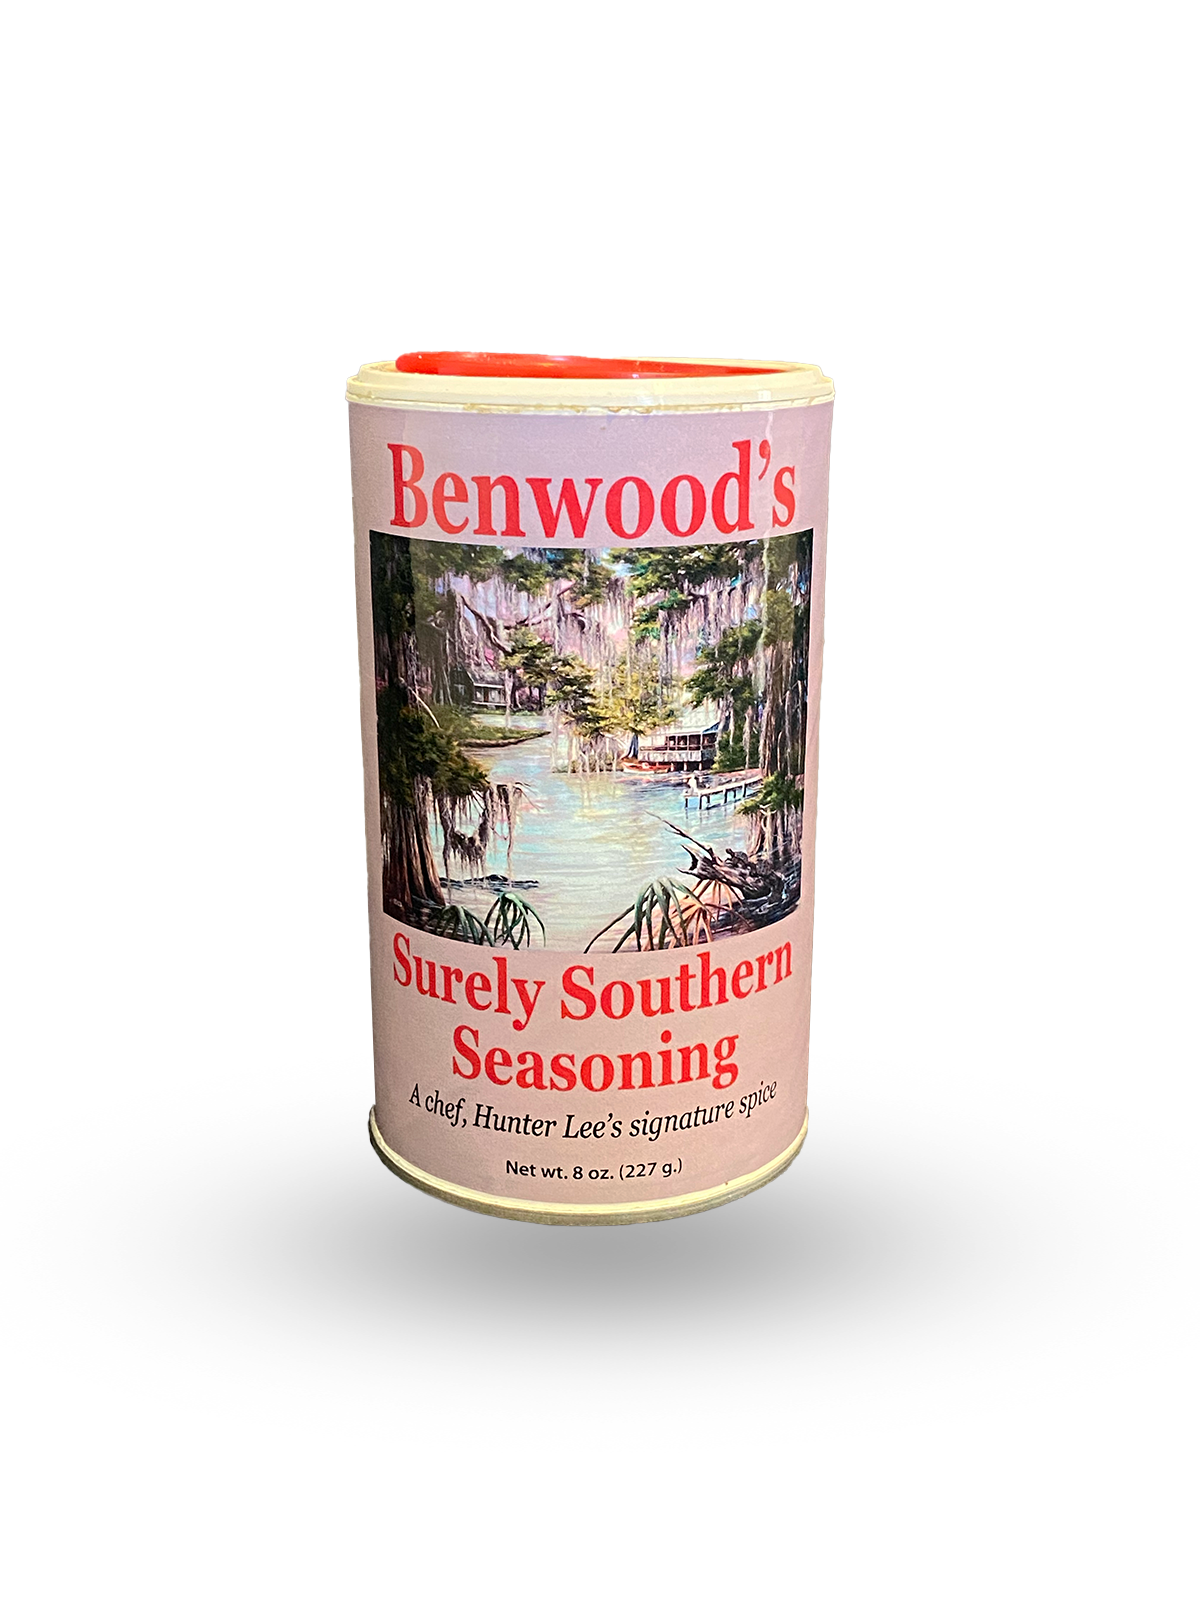 B & K Southern Boy Seasonings All Purpose Seasoning (No Salt) Case